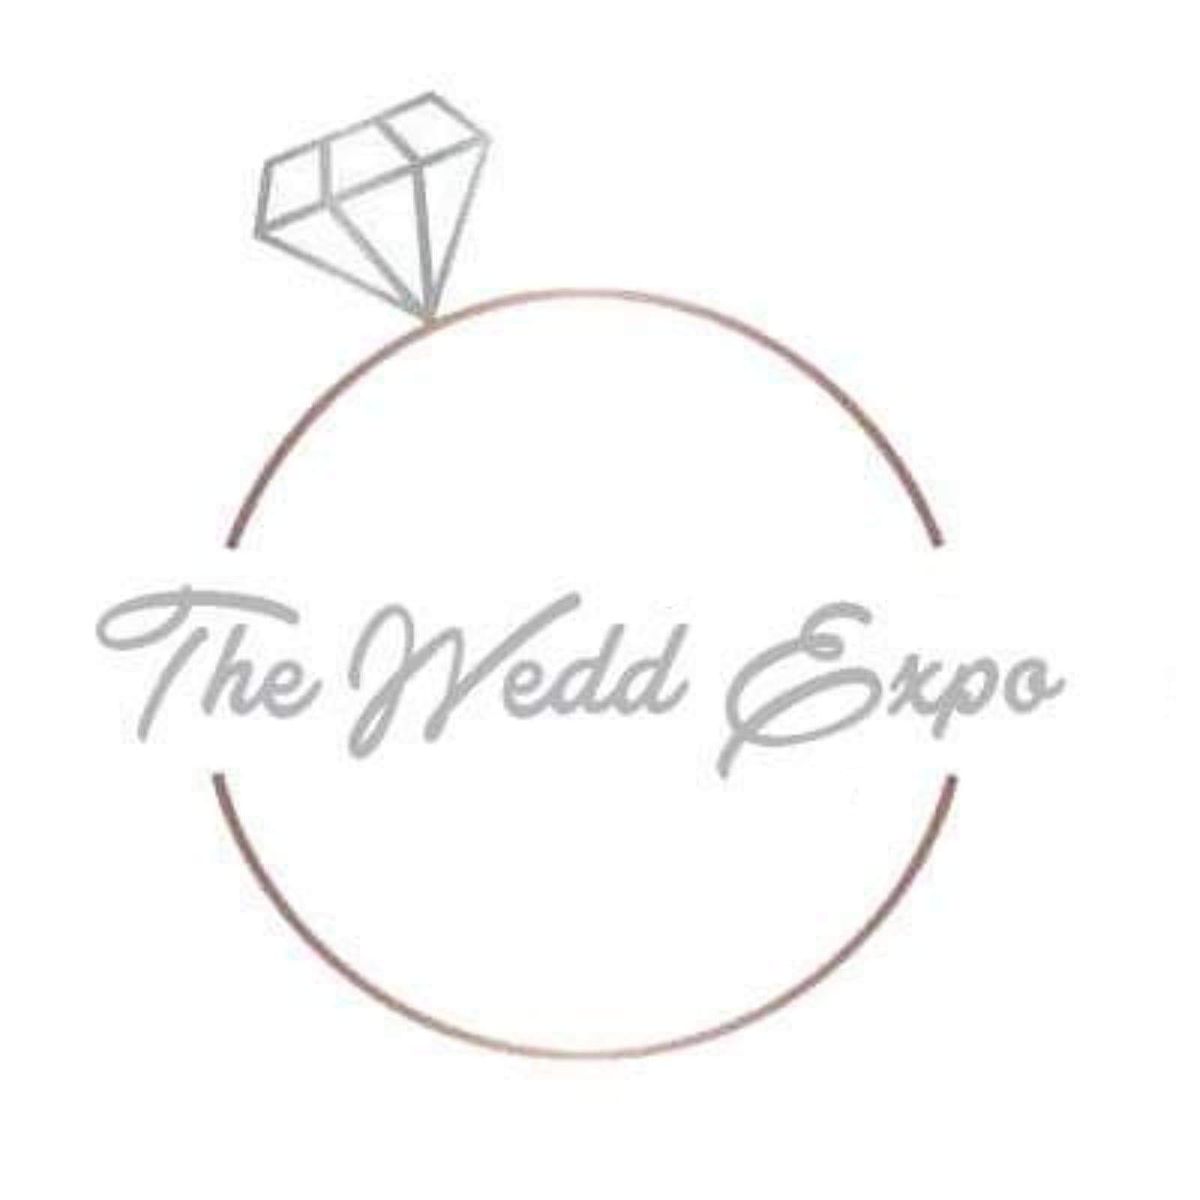 The Wedd Expo